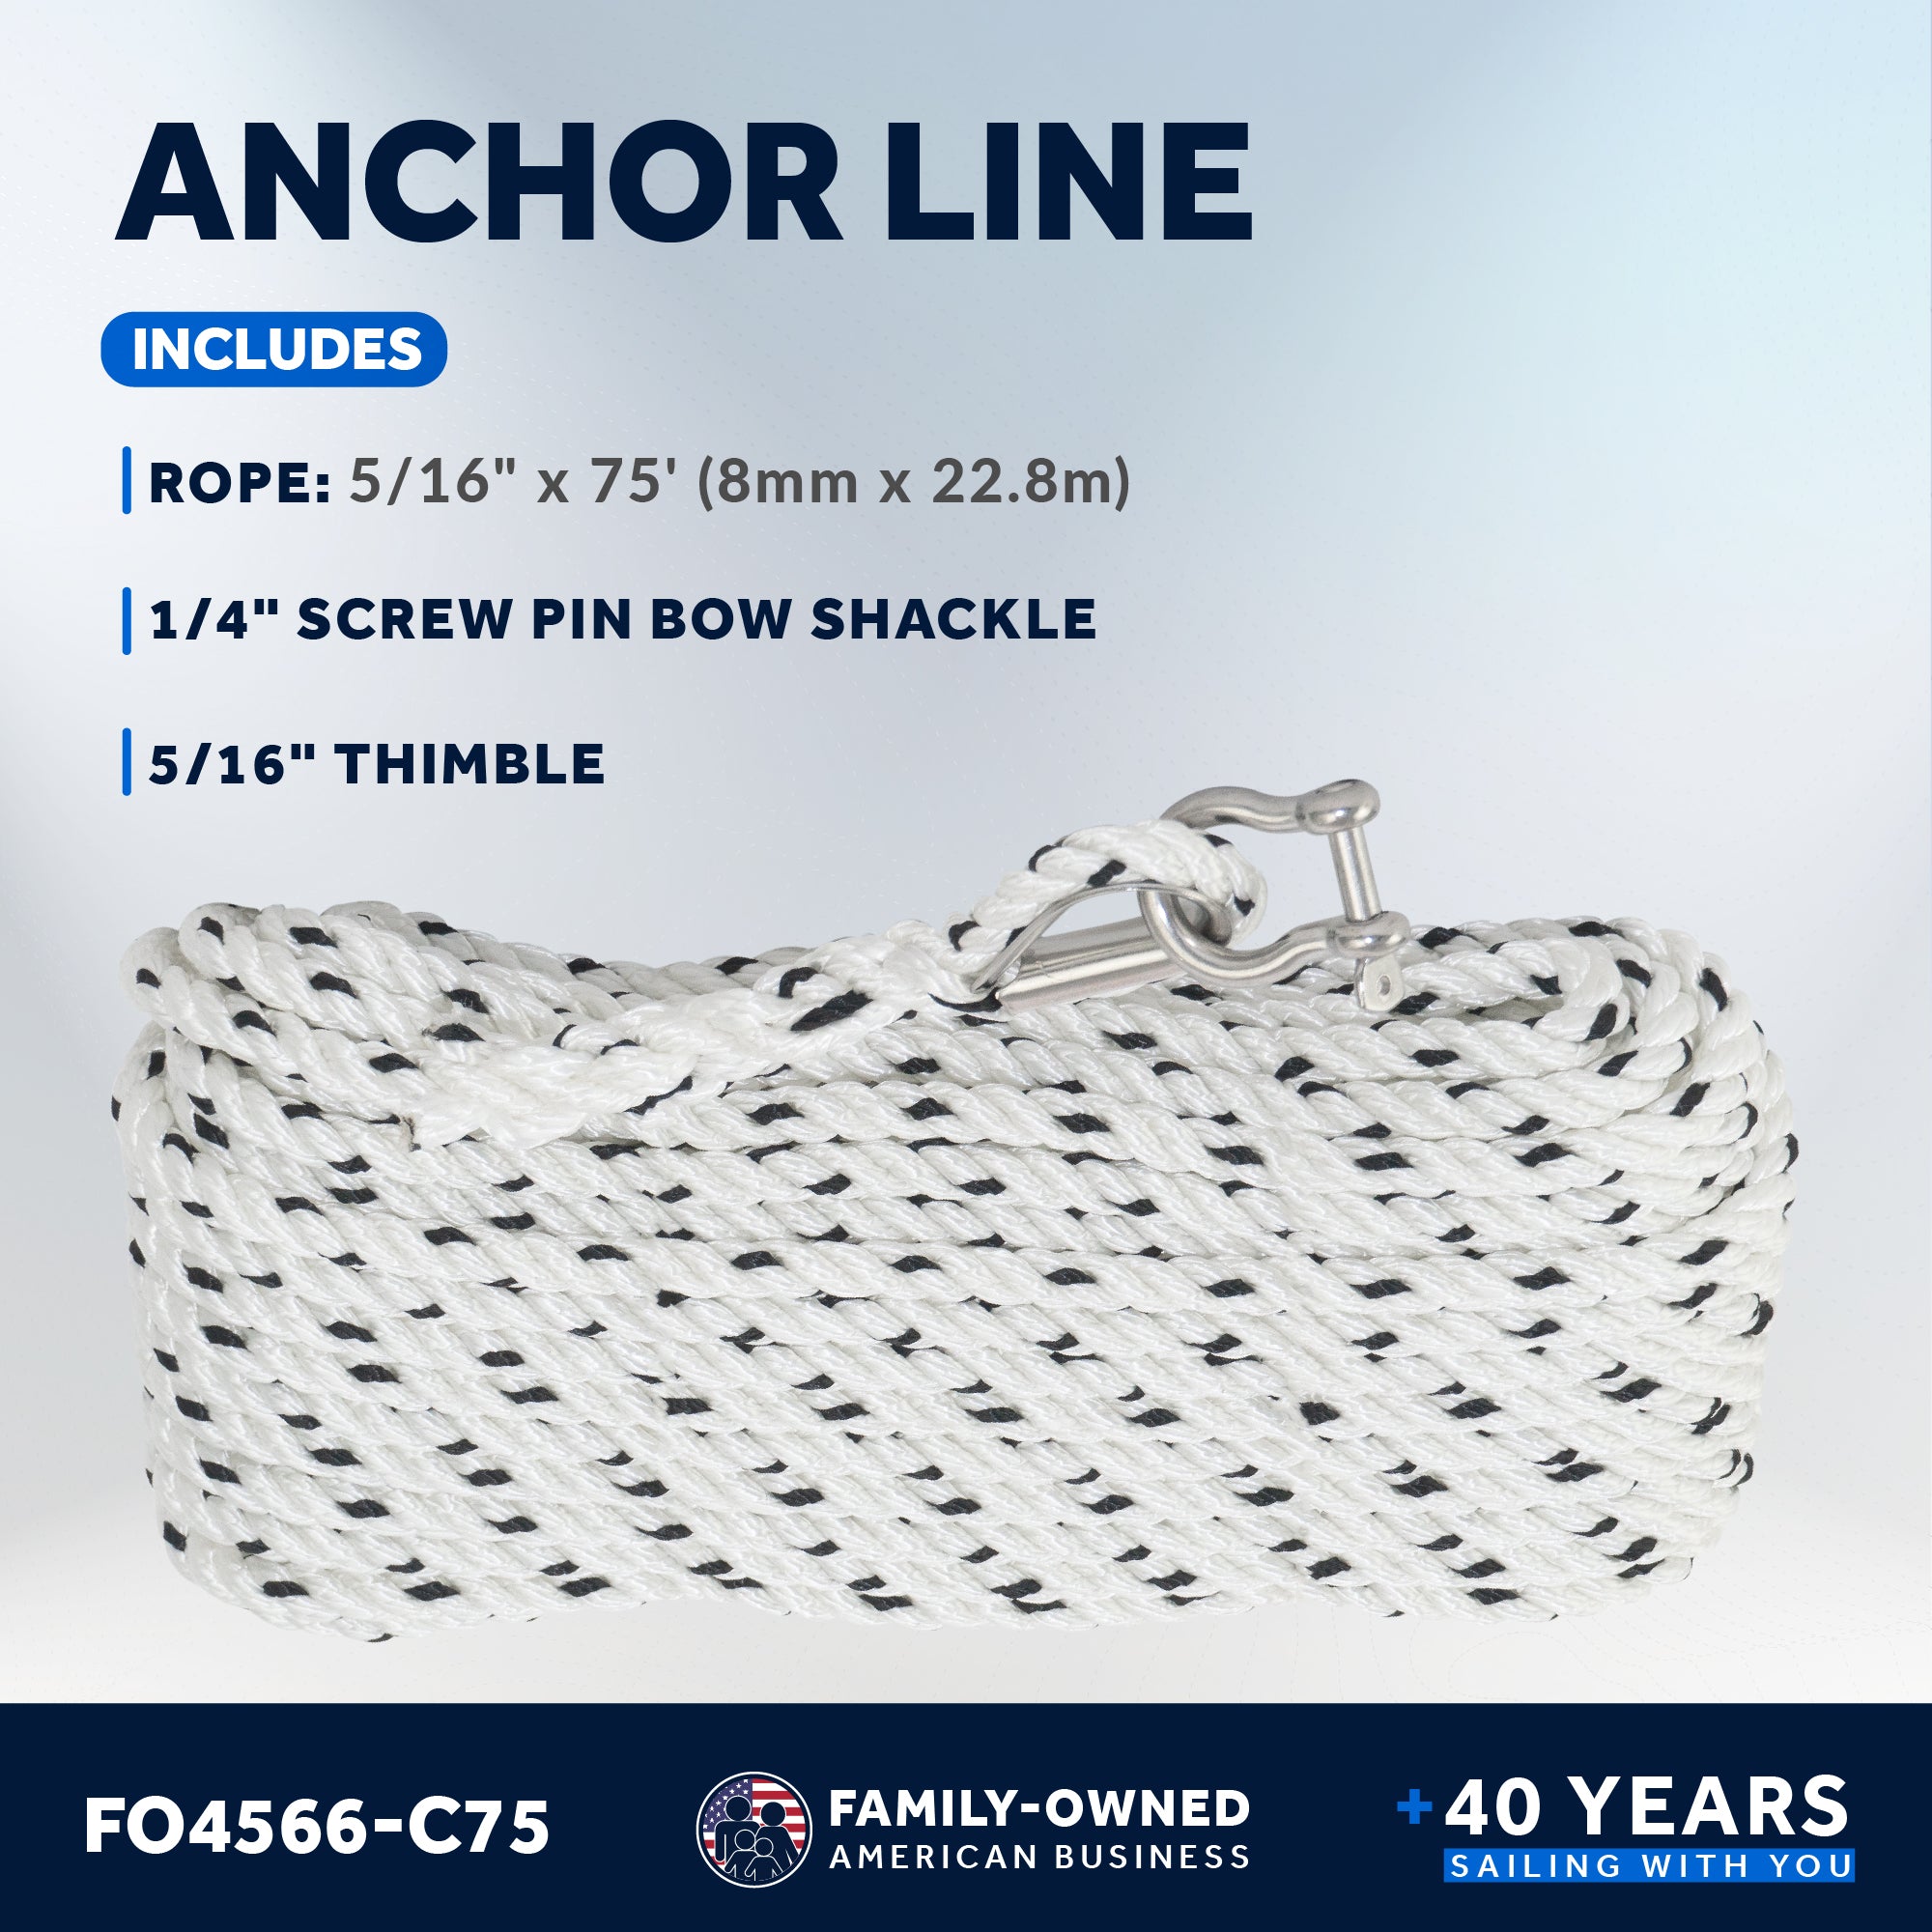 Anchor Line 5/16" x 75', 3-Strand Nylon, Spliced - FO4566-C75